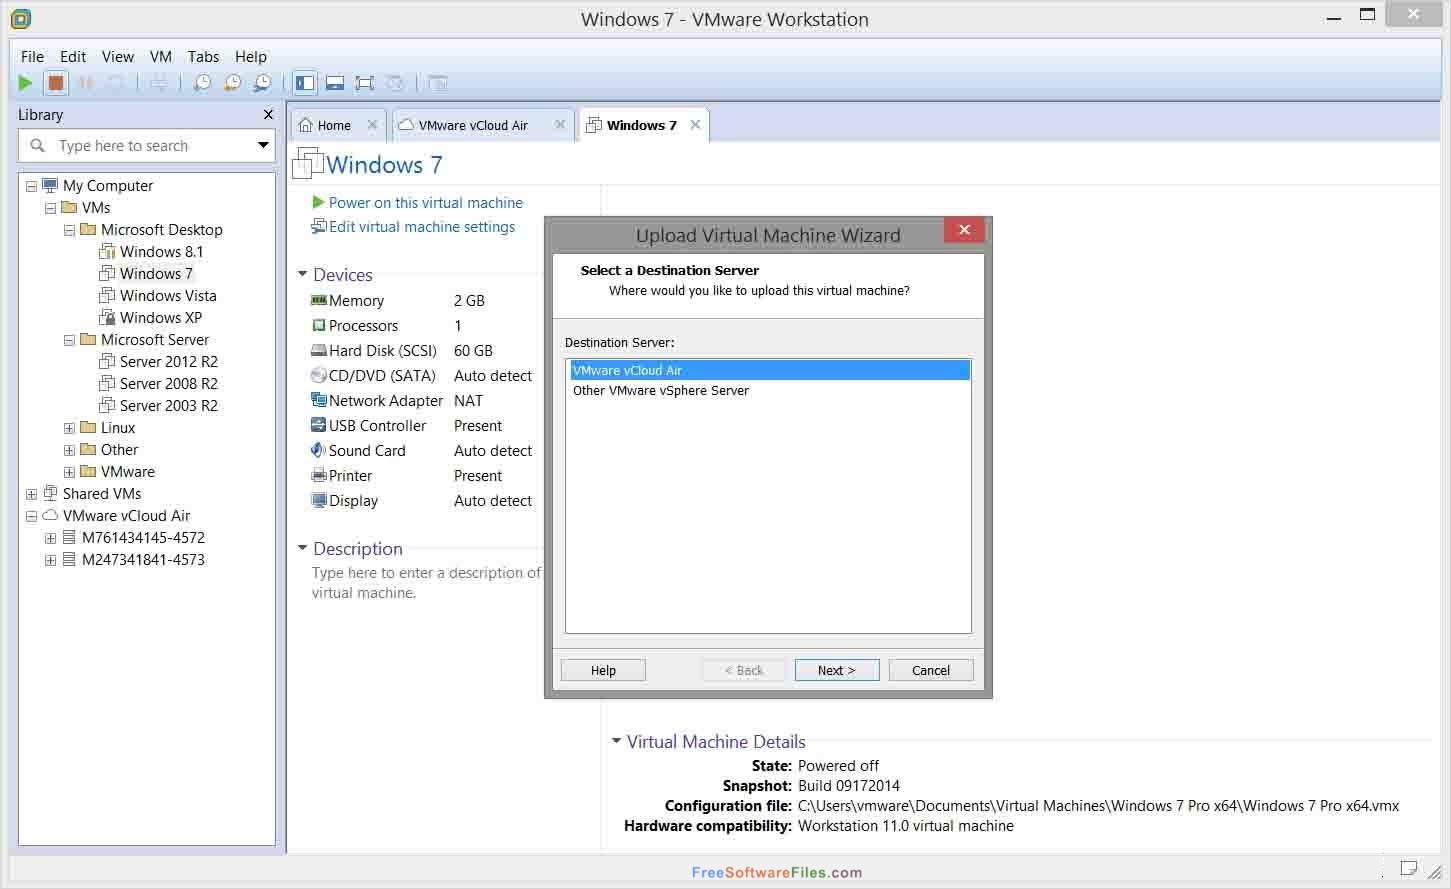 VMware Workstation Pro 14 free download full version